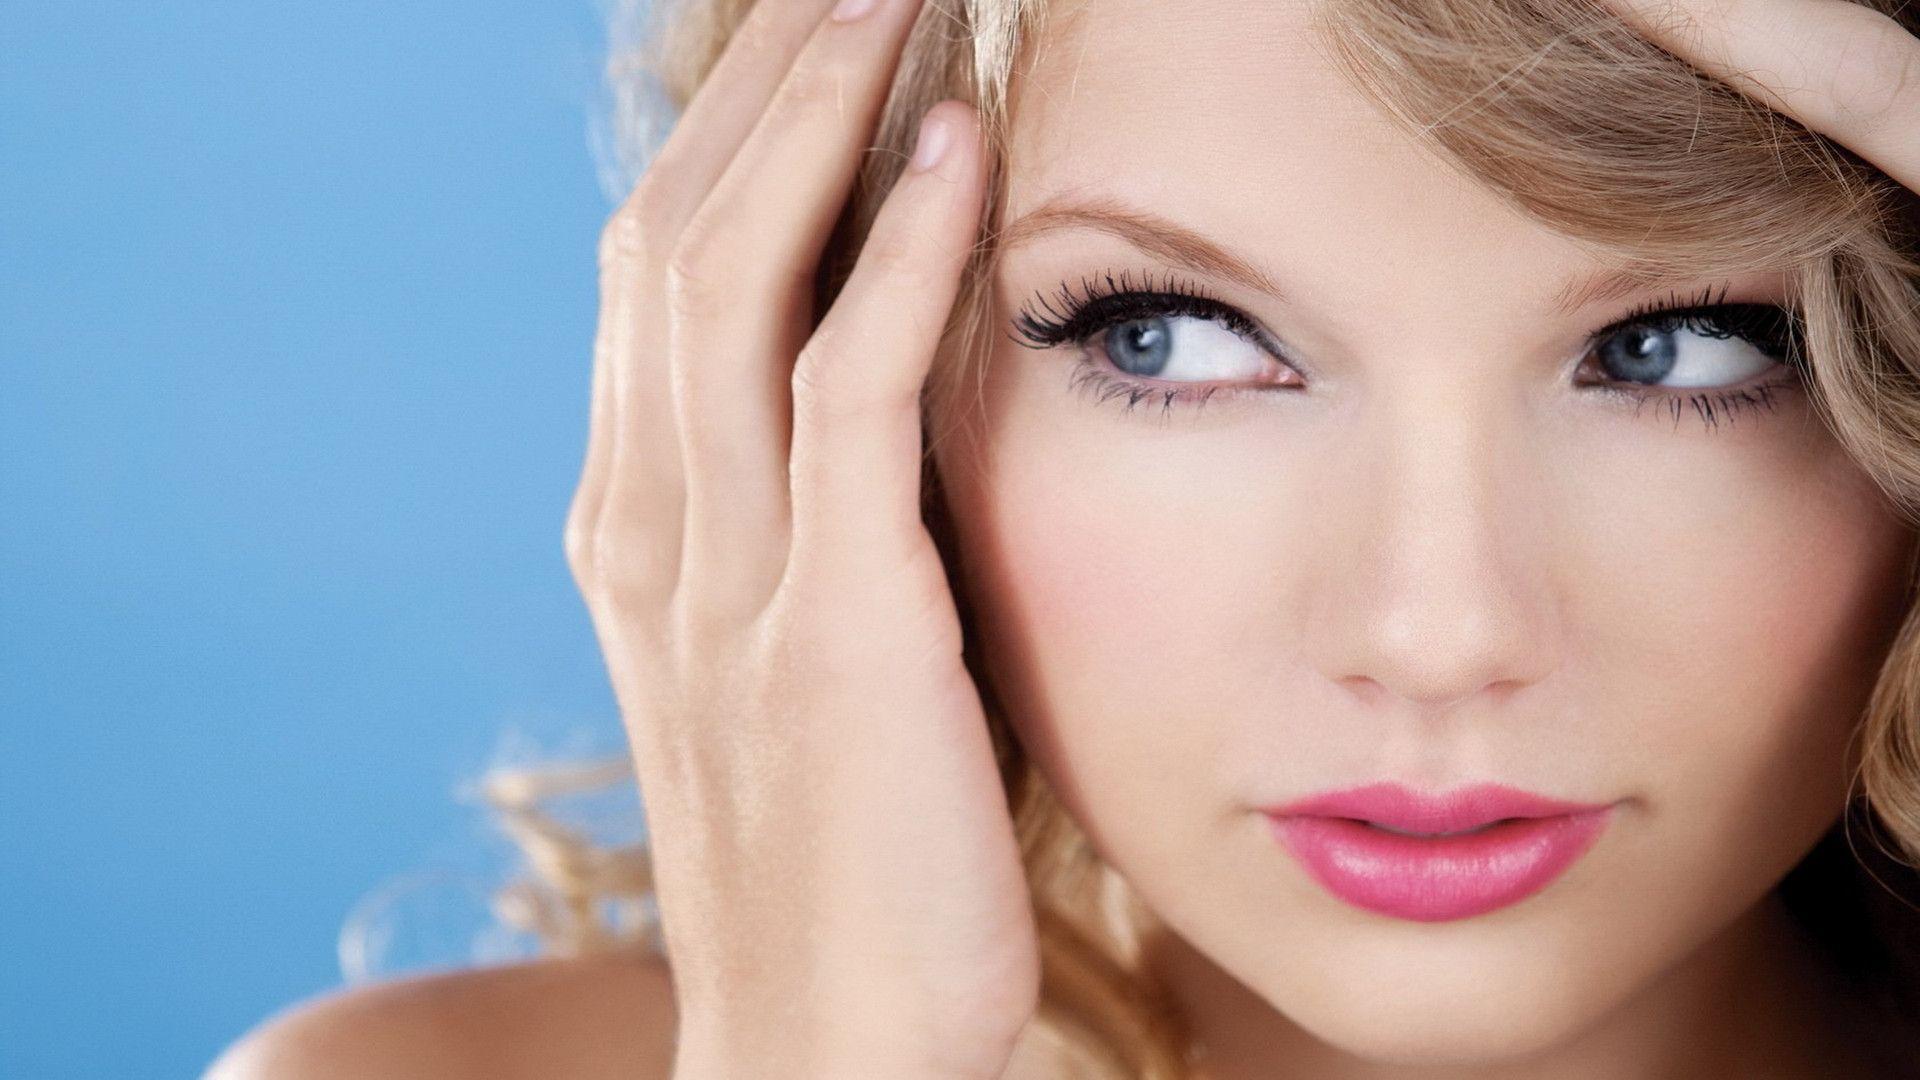 Singer Taylor Swift Wallpaper 01. hdwallpaper